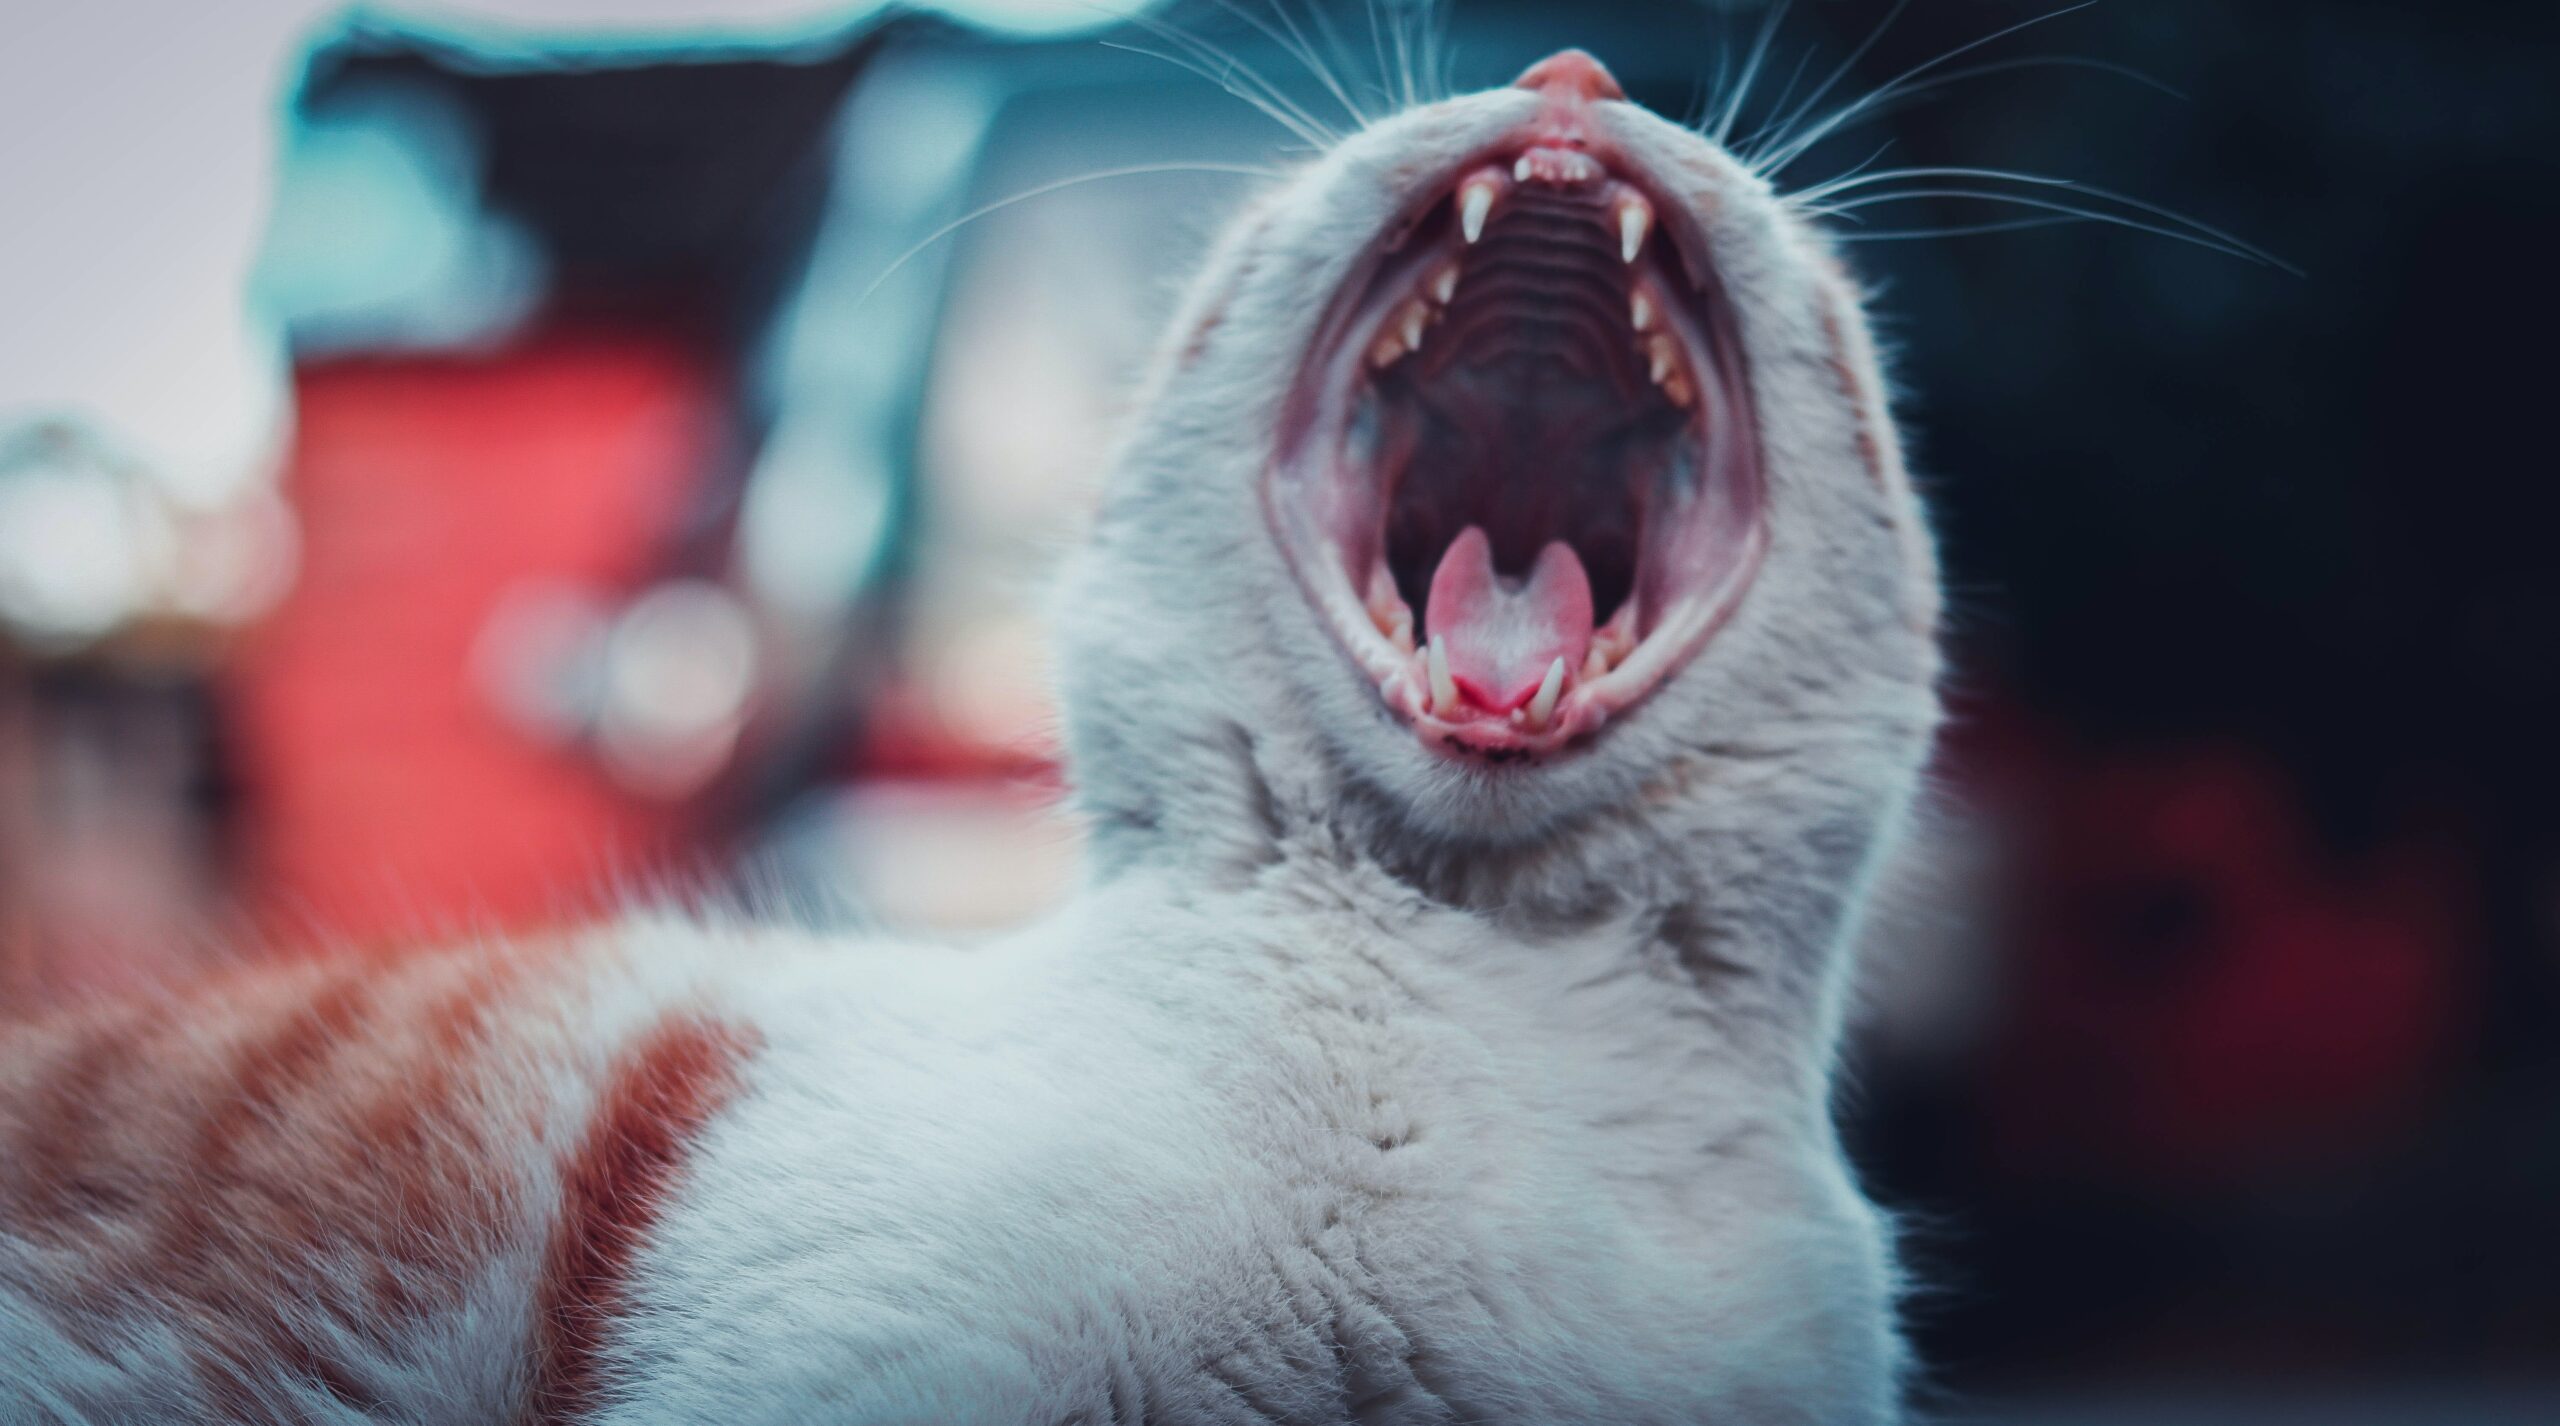 How many teeth do cats have?